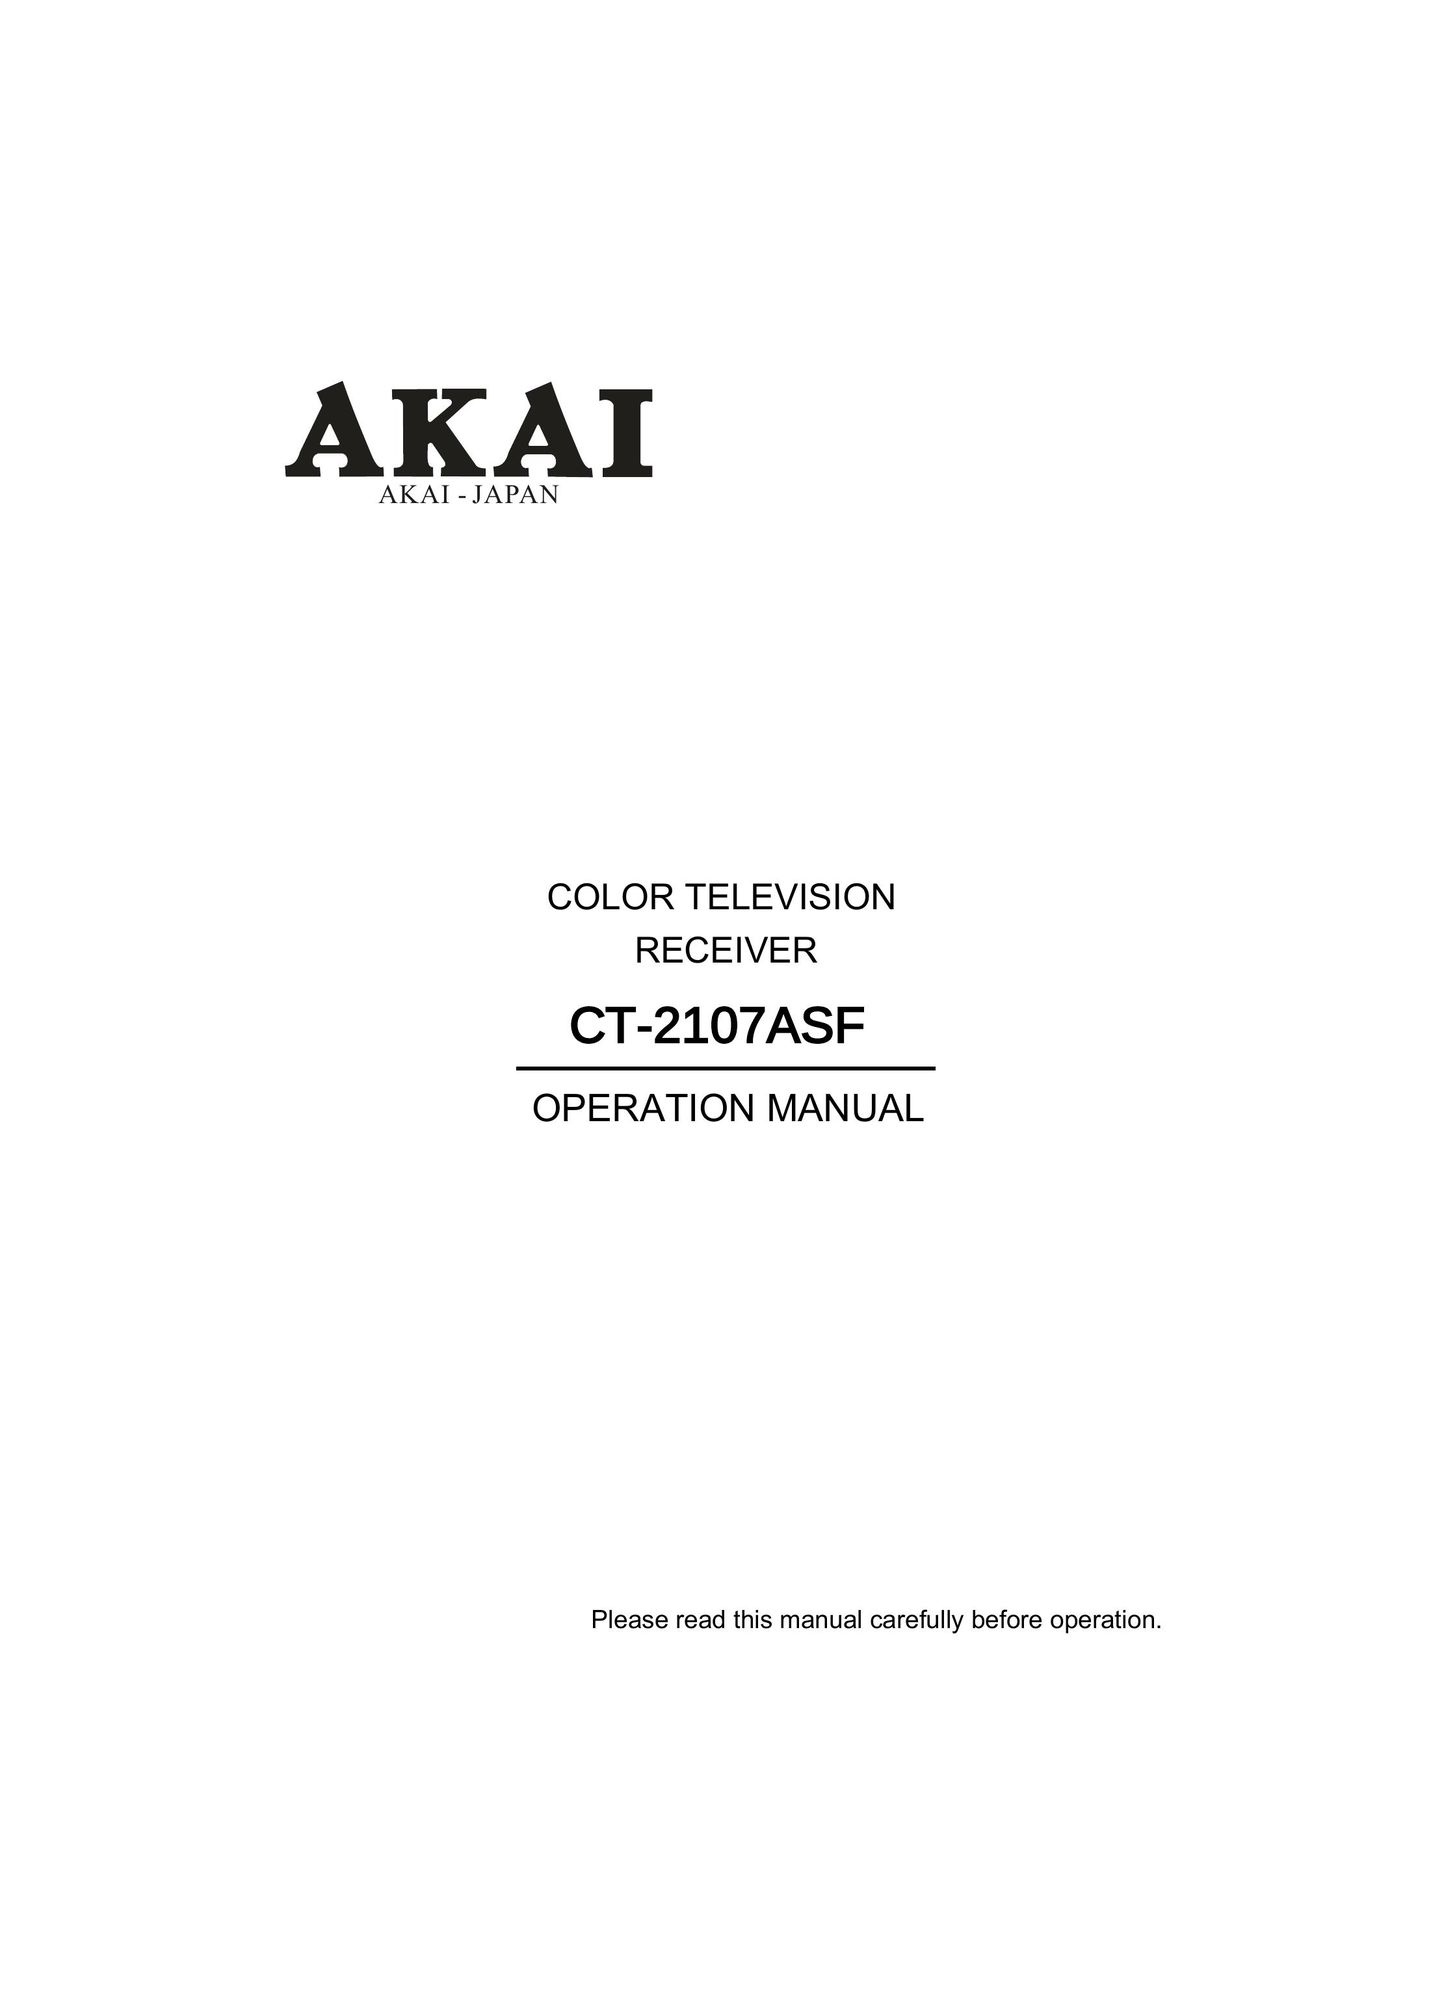 Akai CT-2107ASF CRT Television User Manual